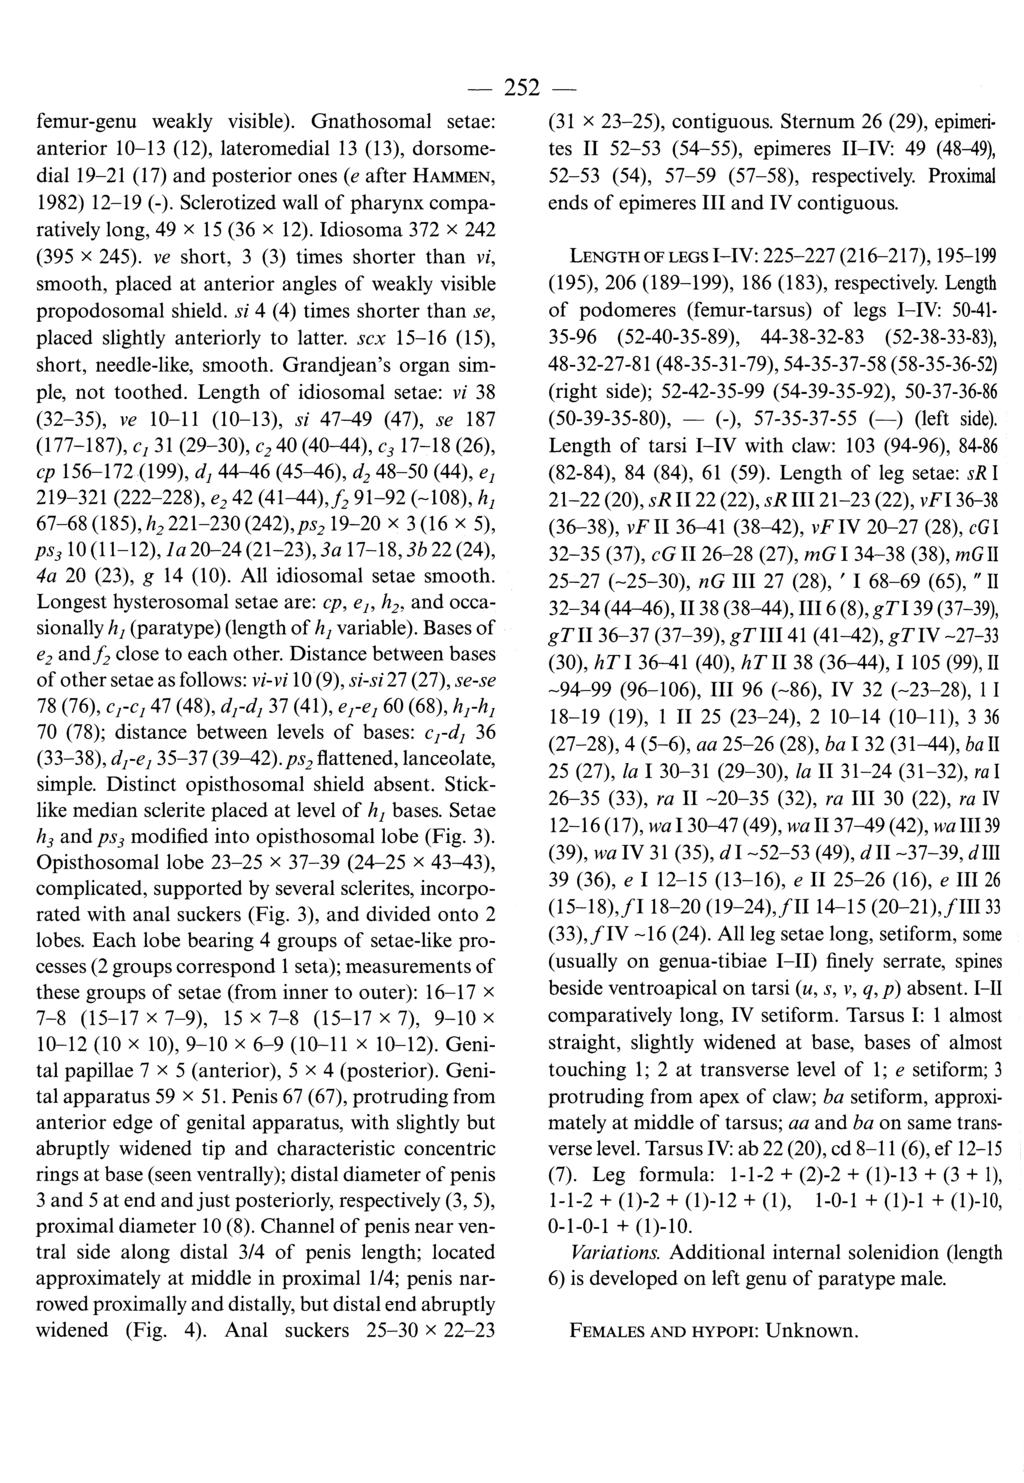 femur-genu weakly visible). Gnathosomal setae: anterior 10-13 (12), lateromedial 13 (13), dorsomedial 19-21 (17) and posterior ones (e after HAMMEN, 1982) 12-19 (-).